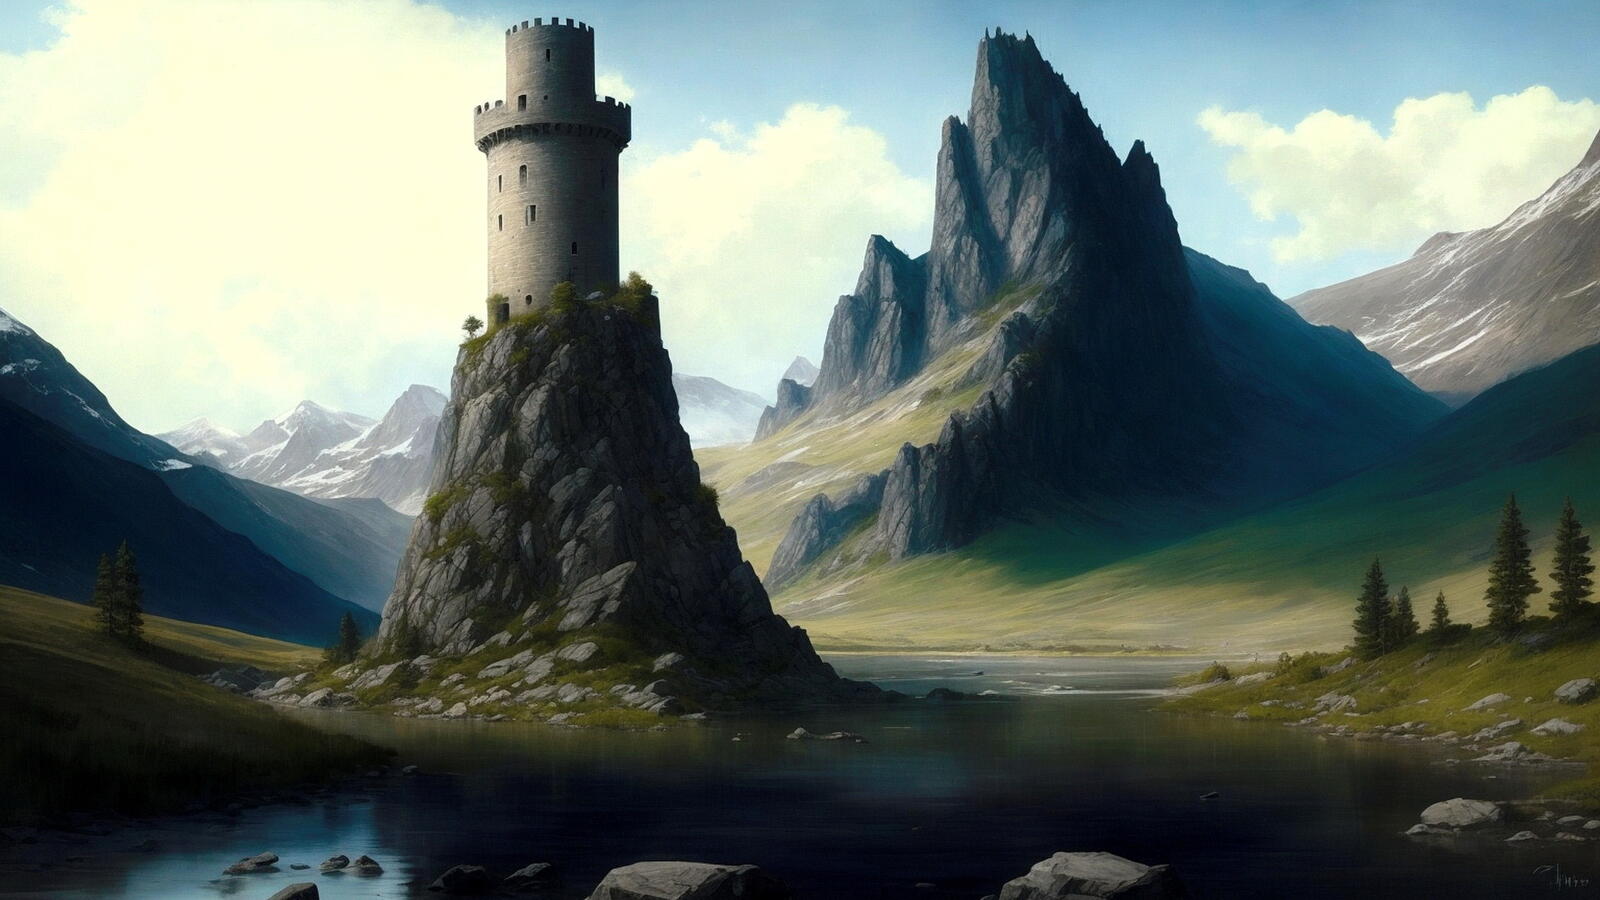 Бесплатное фото Башня у реки на фоне гор